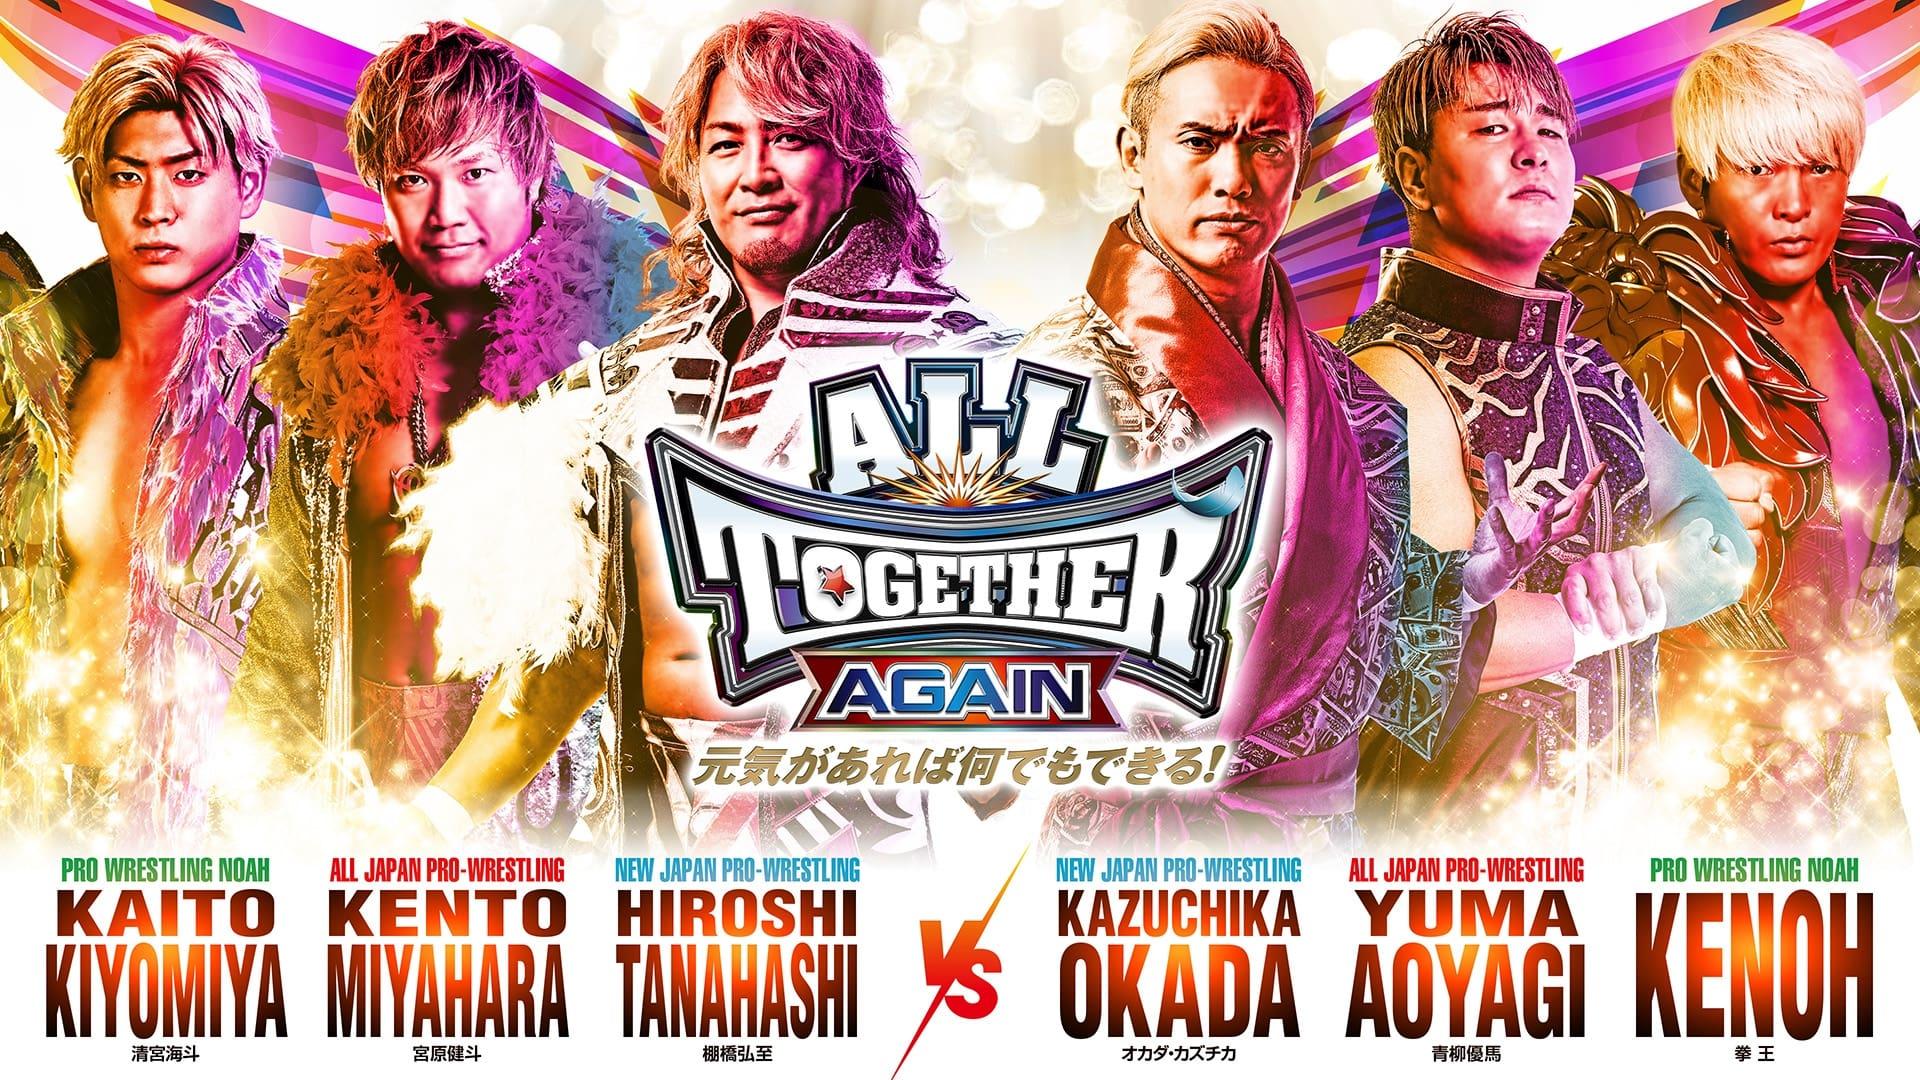 NJPW/AJPW/NOAH All Together: Again backdrop